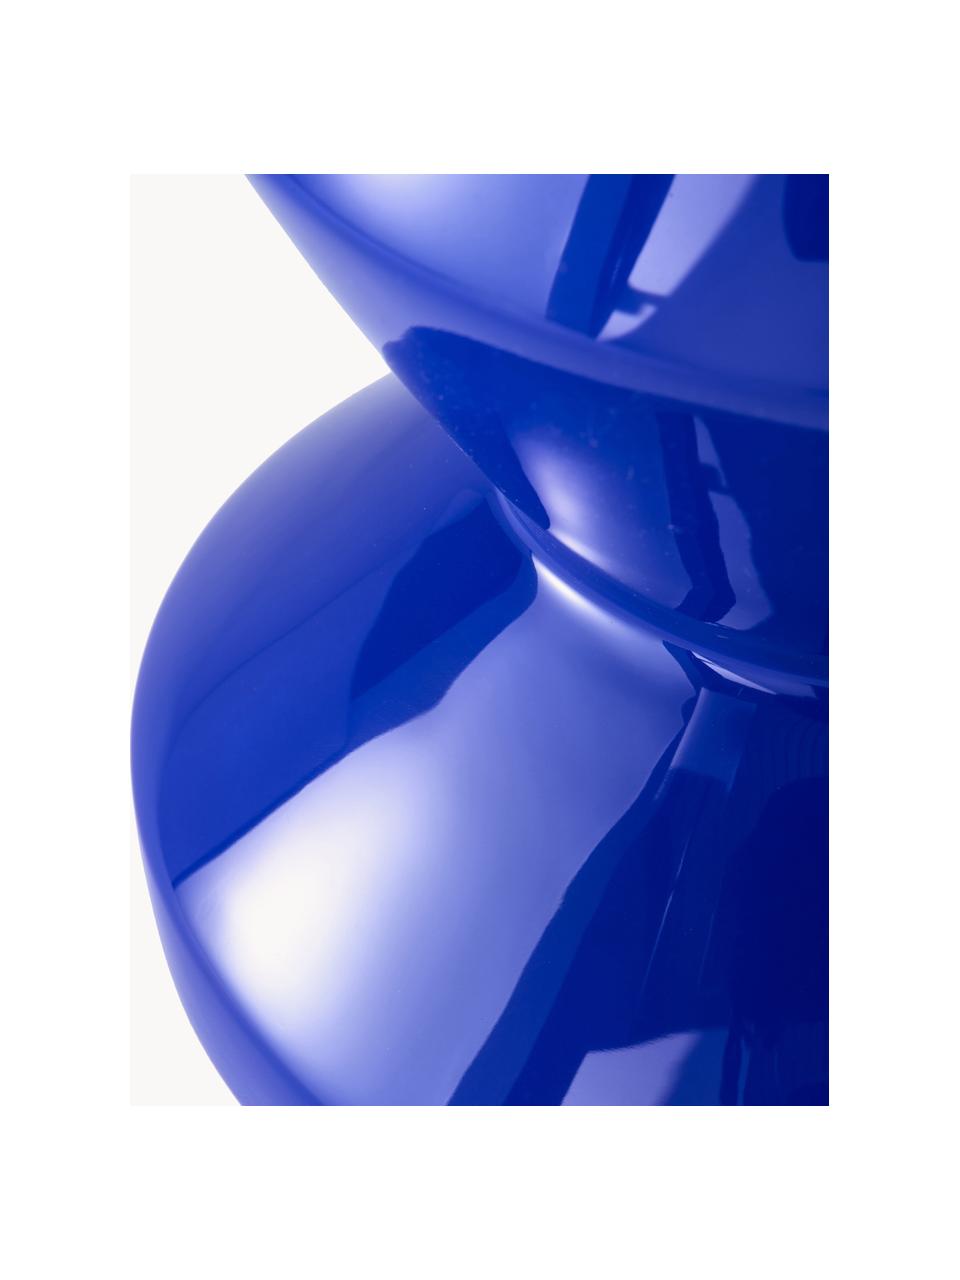 Mesa auxiliar redonda Zig Zag, Plástico pintado, Azul real, Ø 36 x Al 46 cm